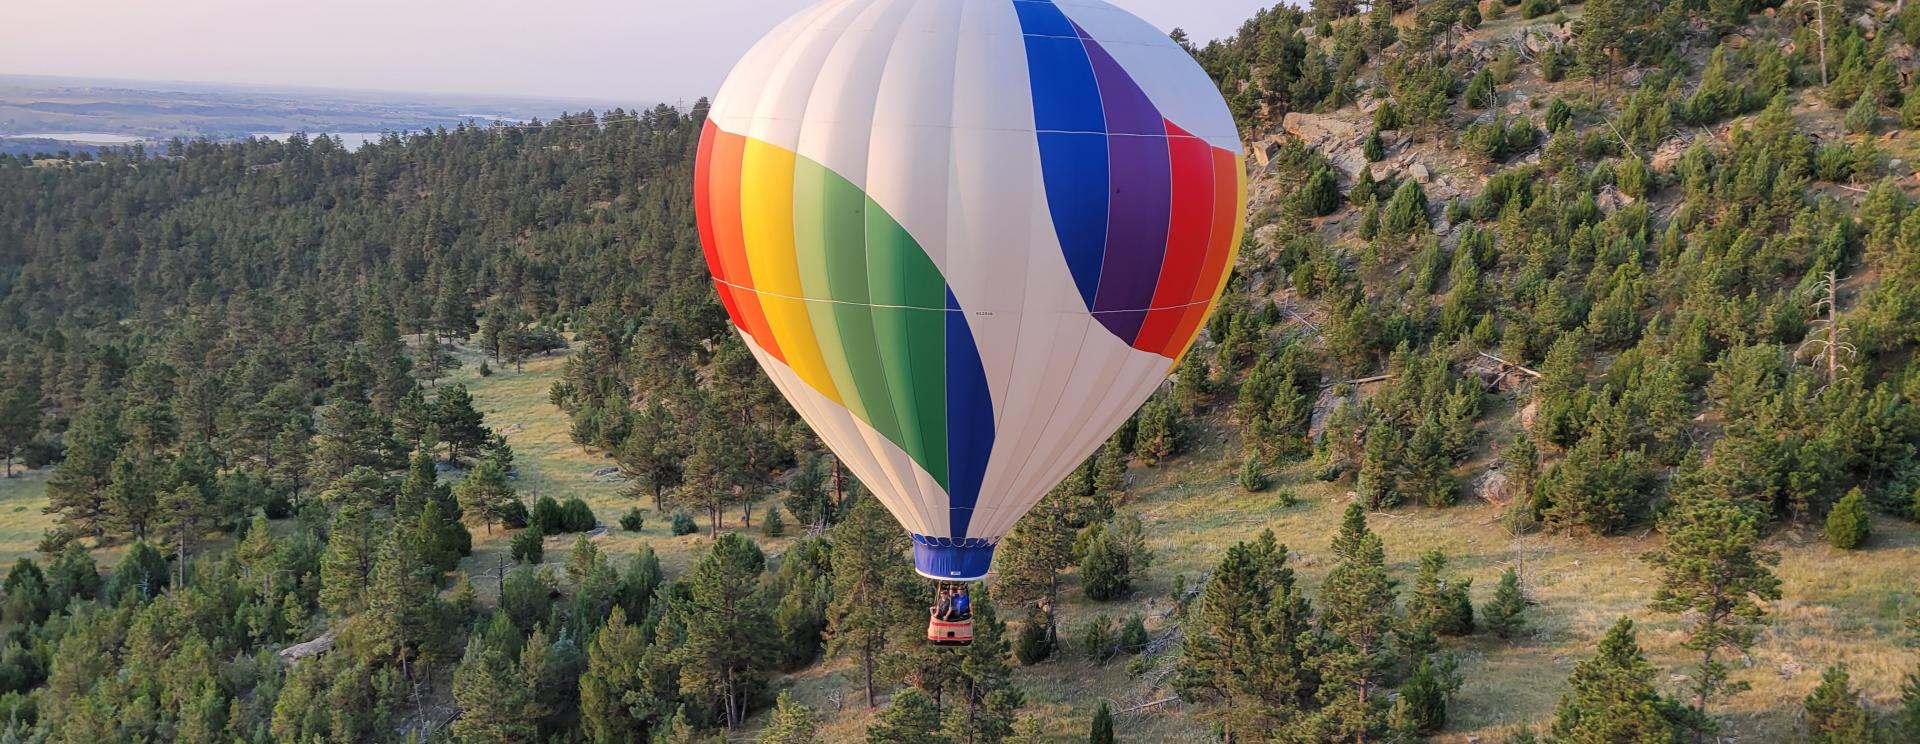 Western Horizons Hot Air Balloons